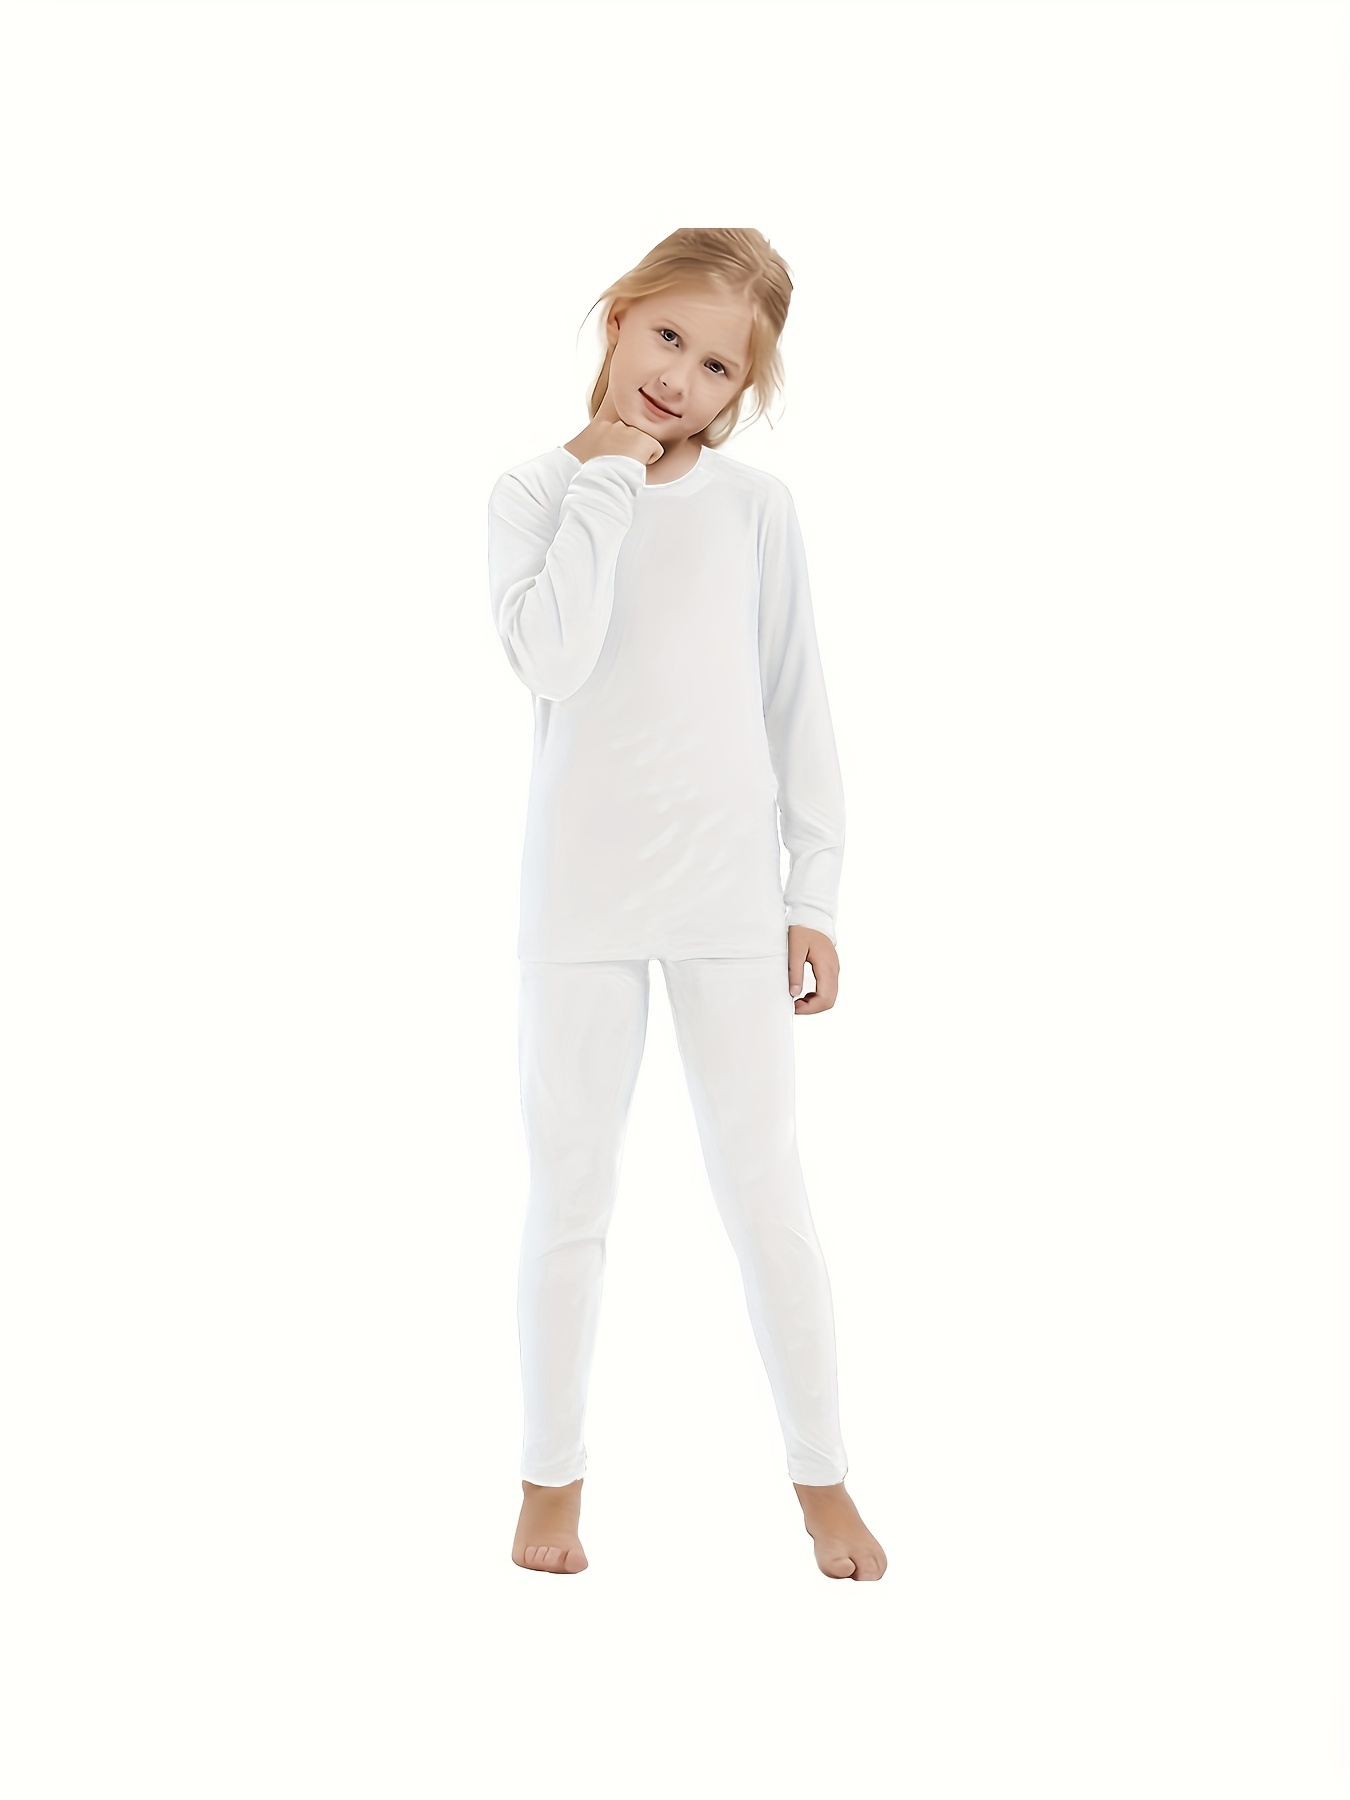 White Color Warmer Thermal Bottoms/Pants For Unisex Kids (Boy & Girls) –  Nino Bambino